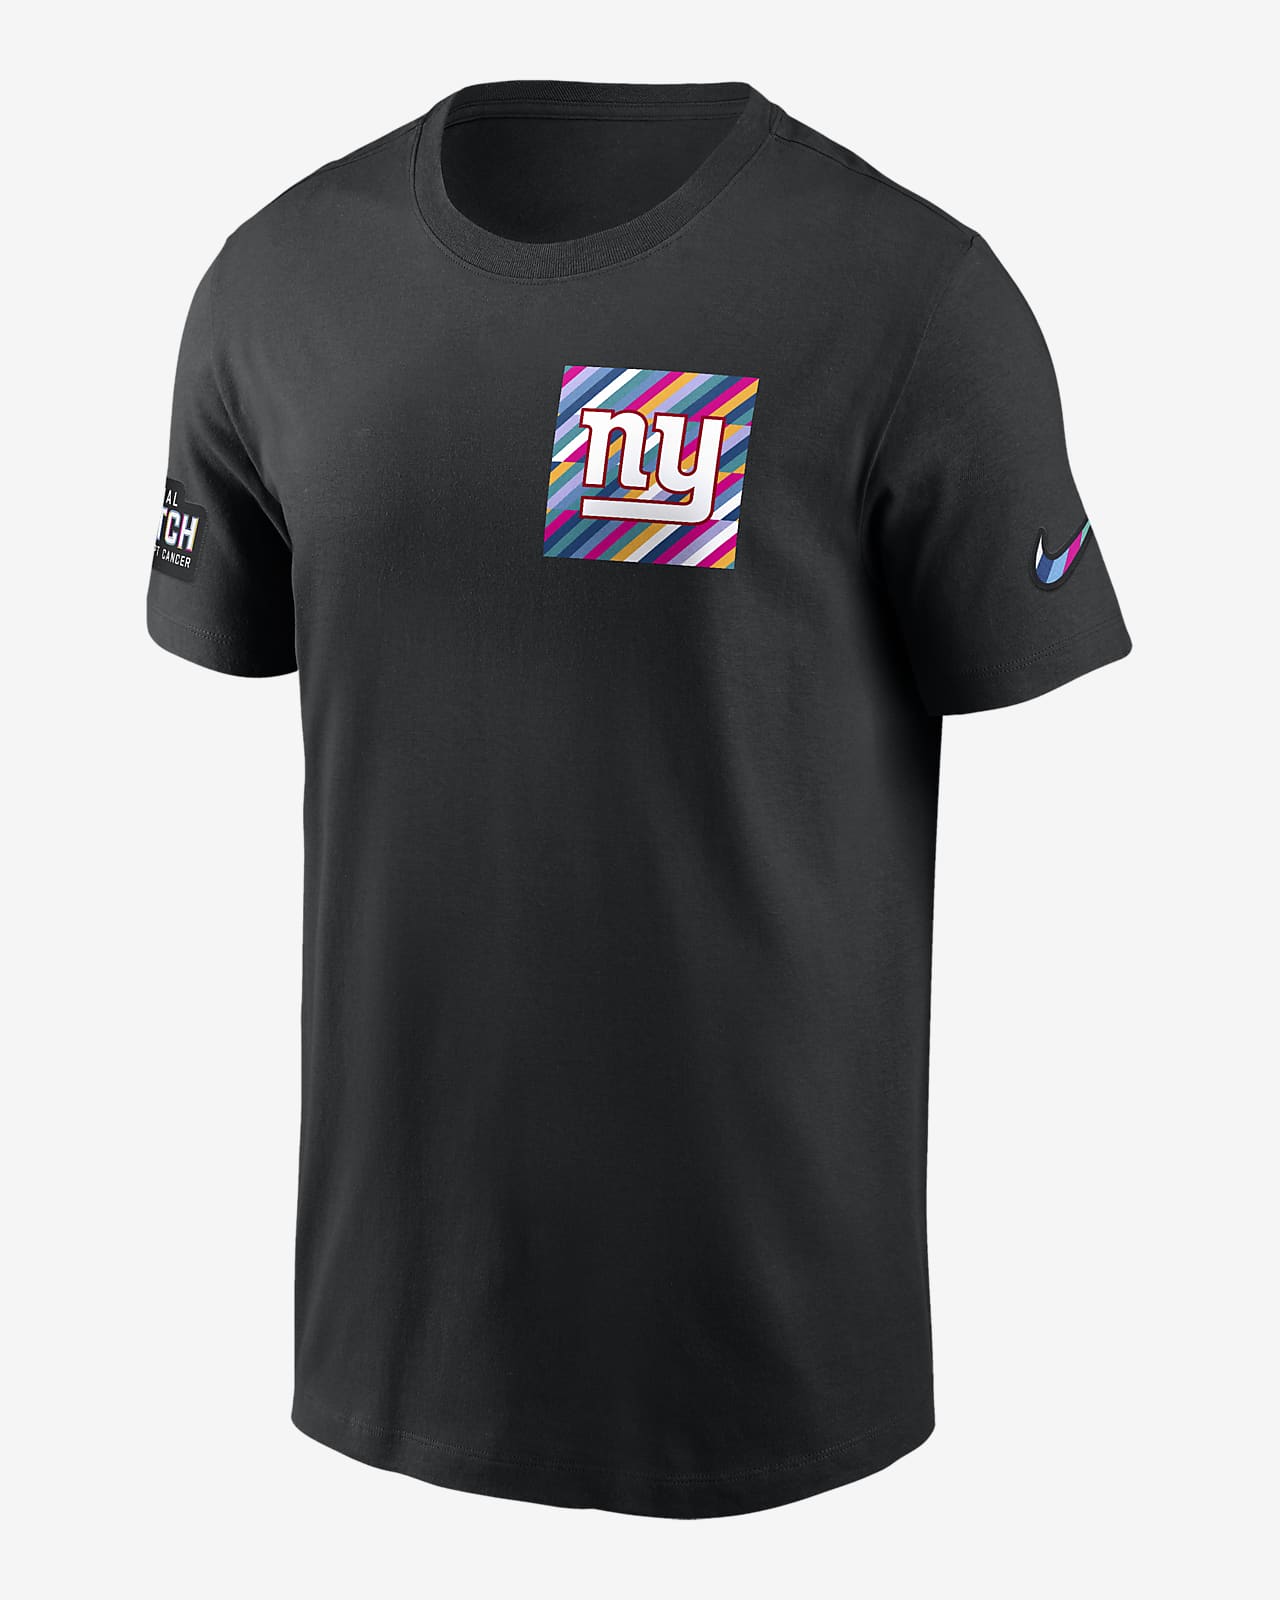 New York Giants Crucial Catch Sideline Men's Nike NFL T-Shirt